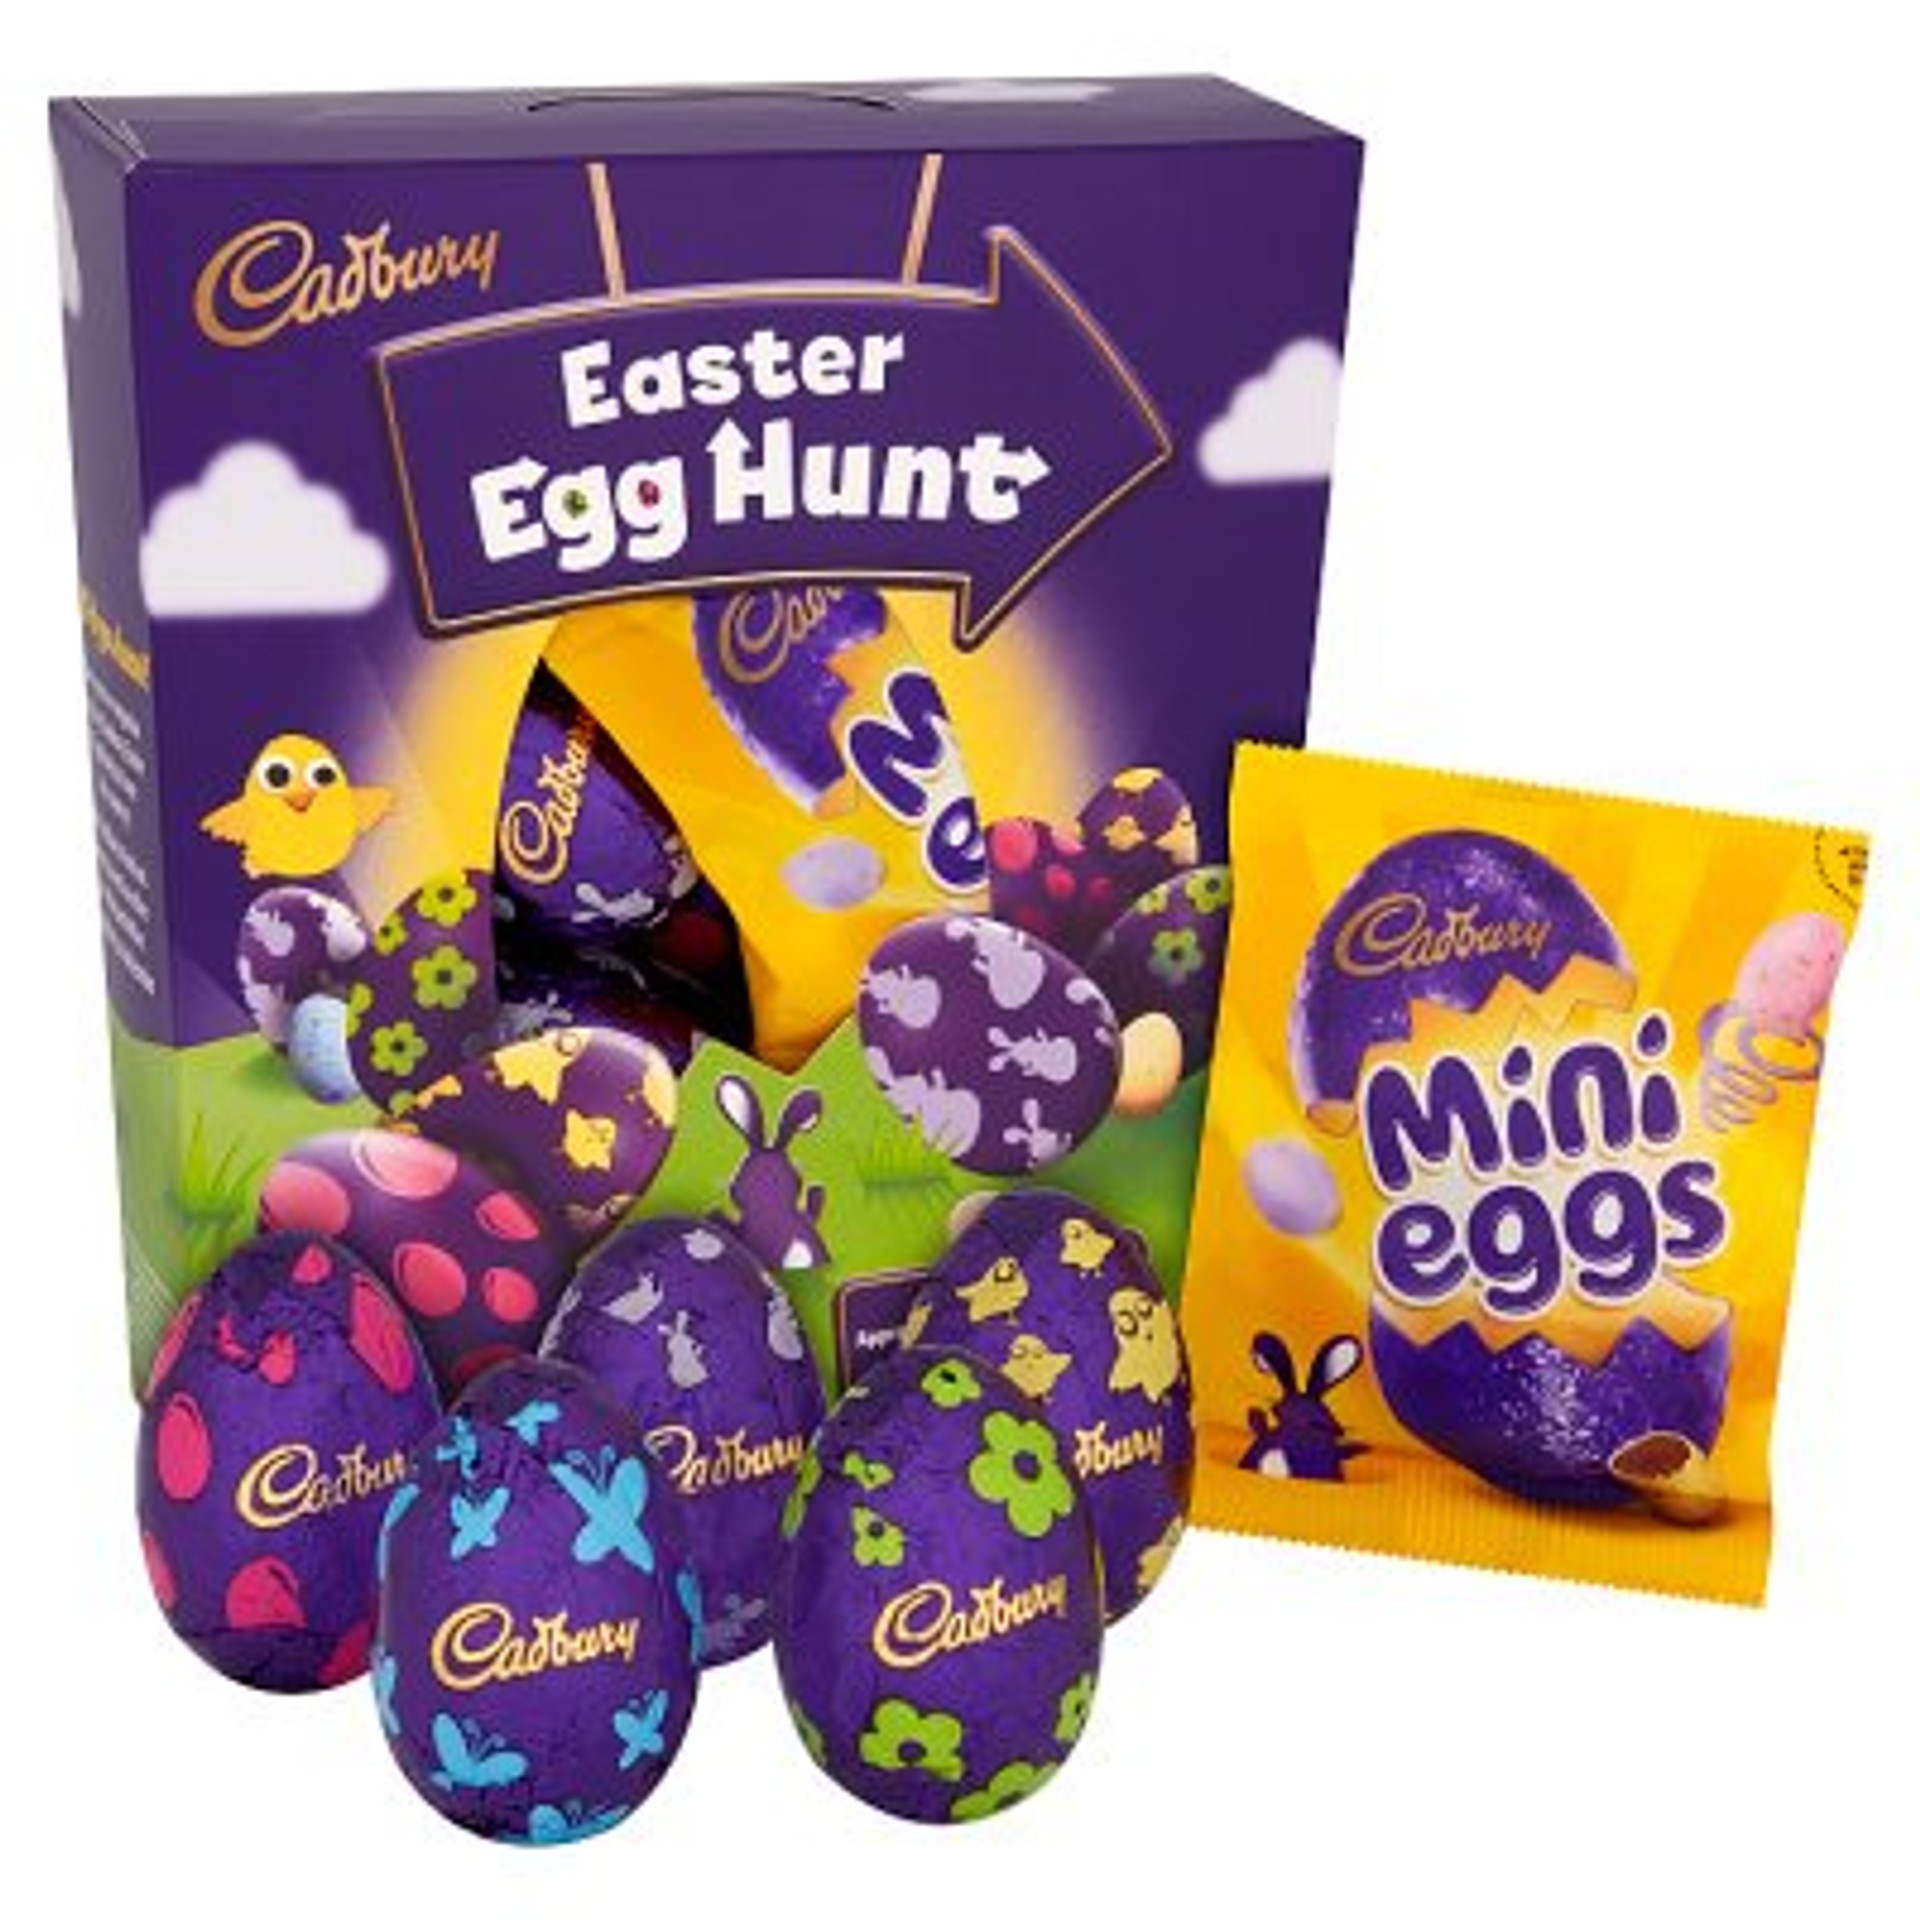 Cadbury Egg Hunt Chocolate Easter Egg Pack with Mini Eggs 176g in